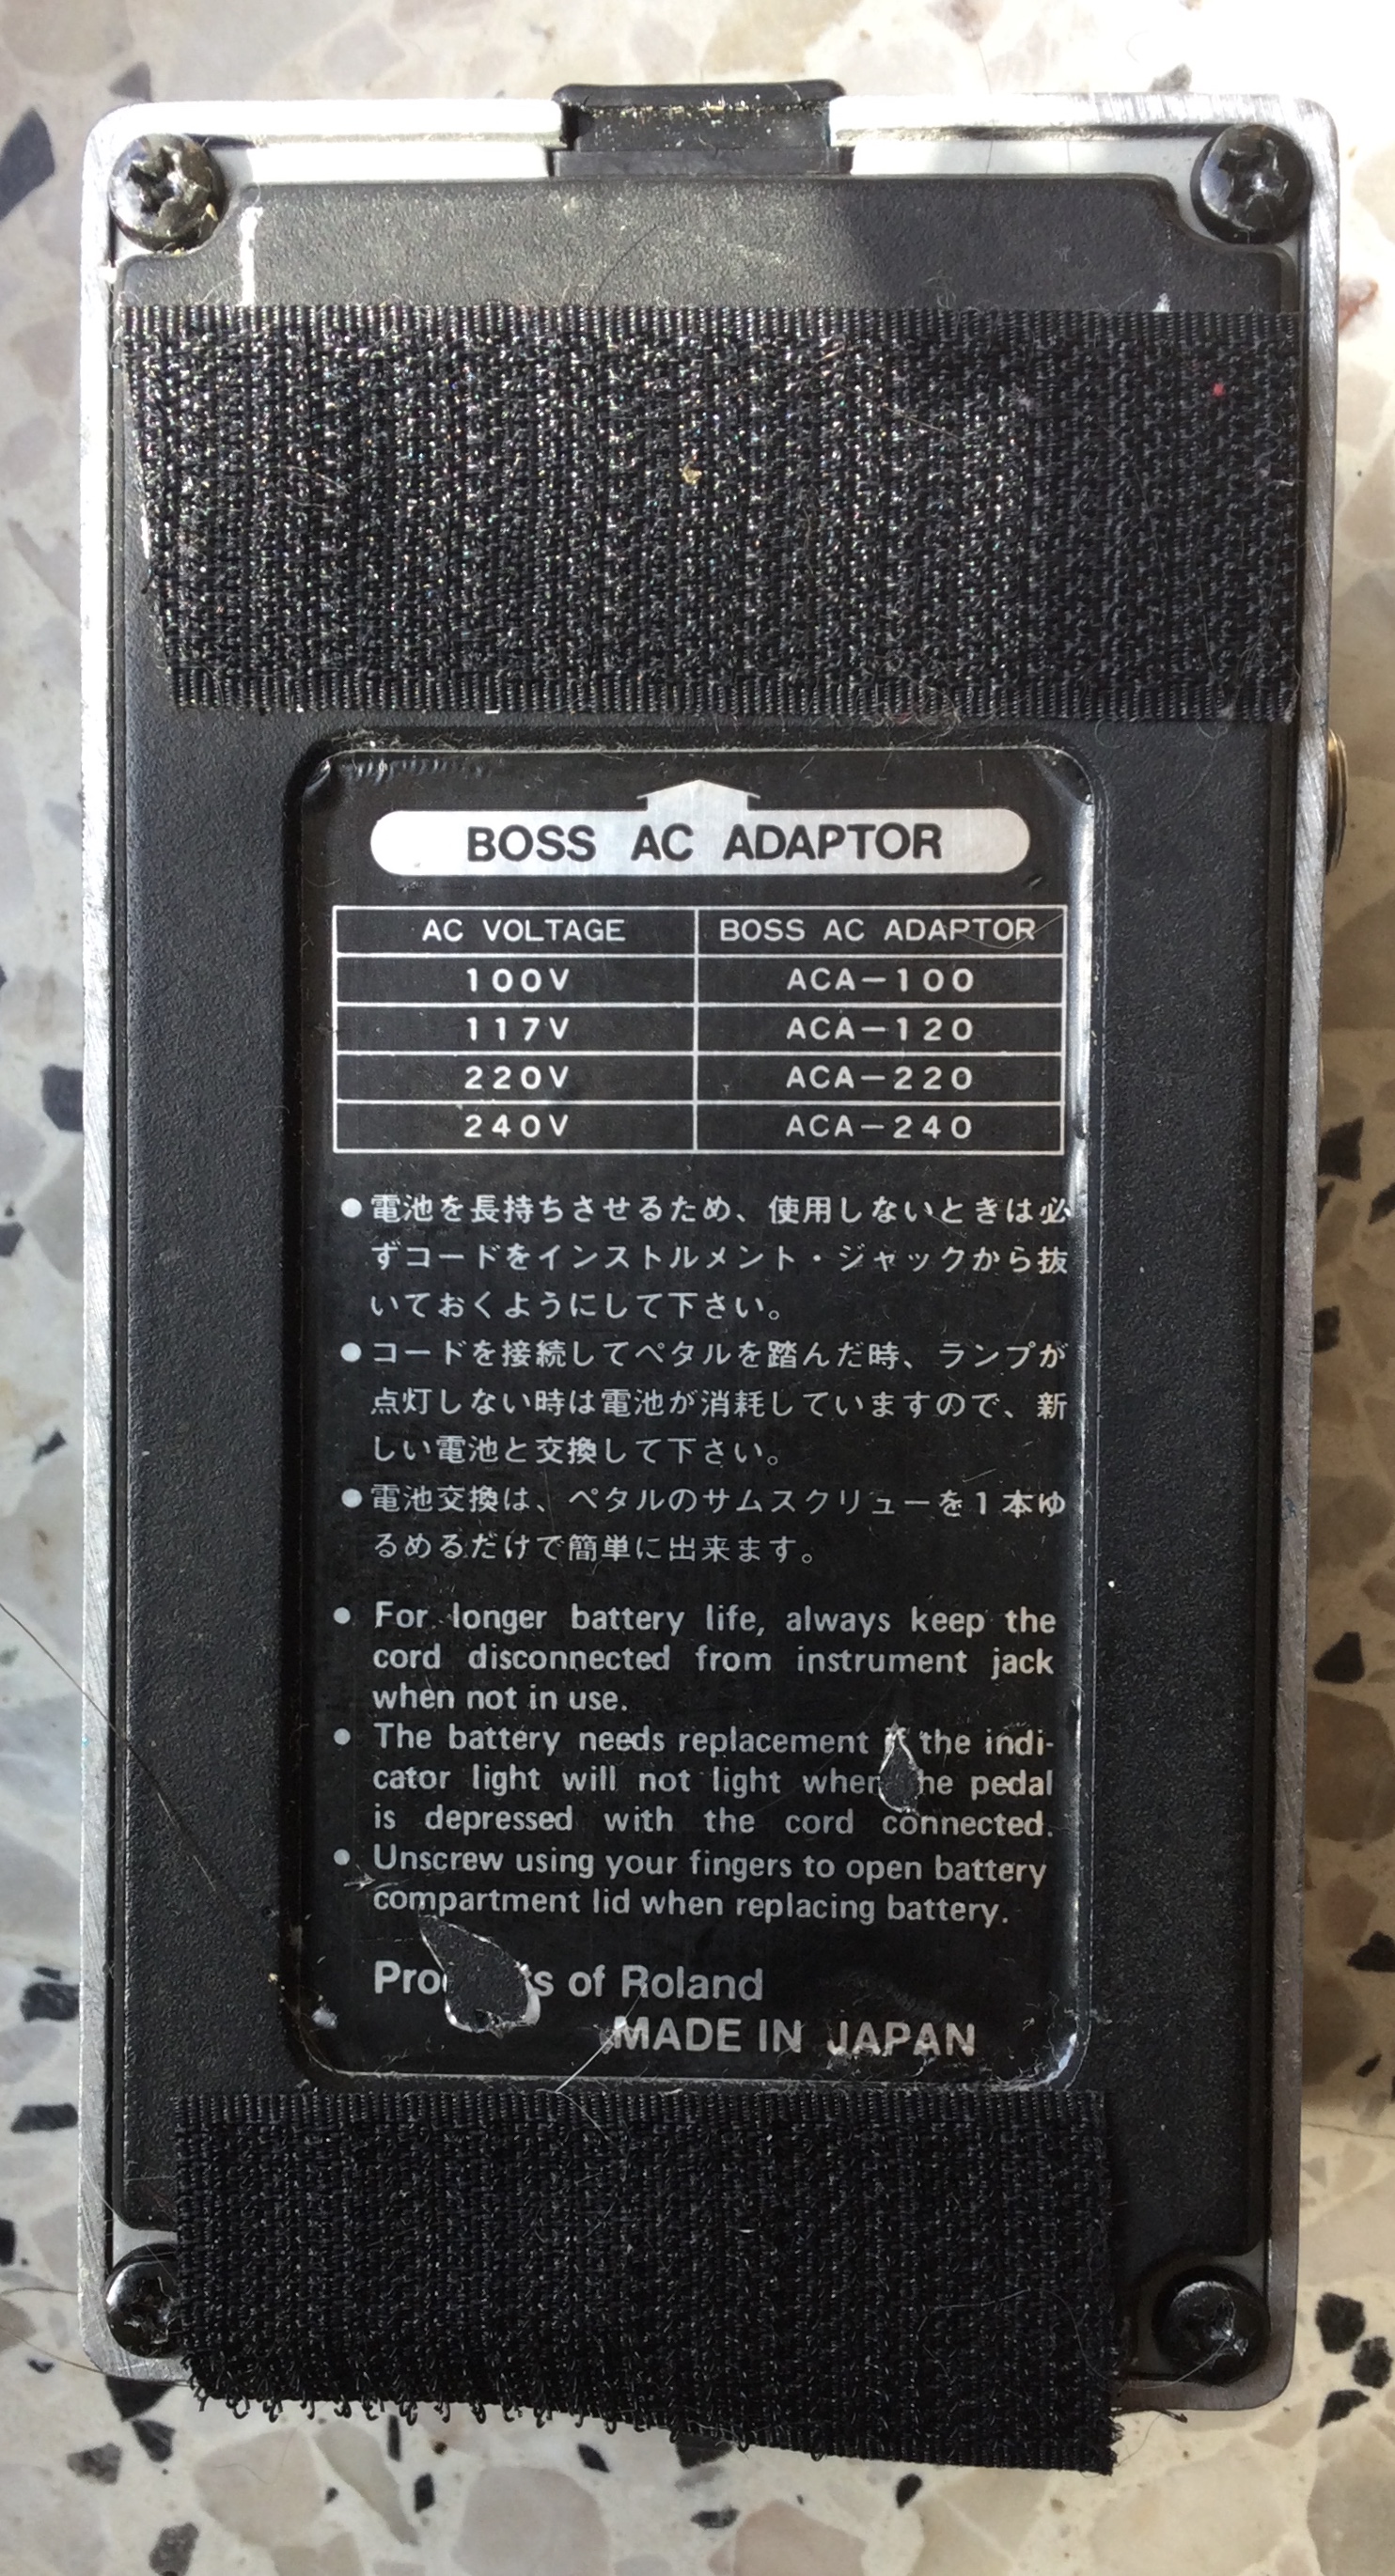 CE-3 Chorus (Japan) - Boss CE-3 Chorus (Japan) - Audiofanzine